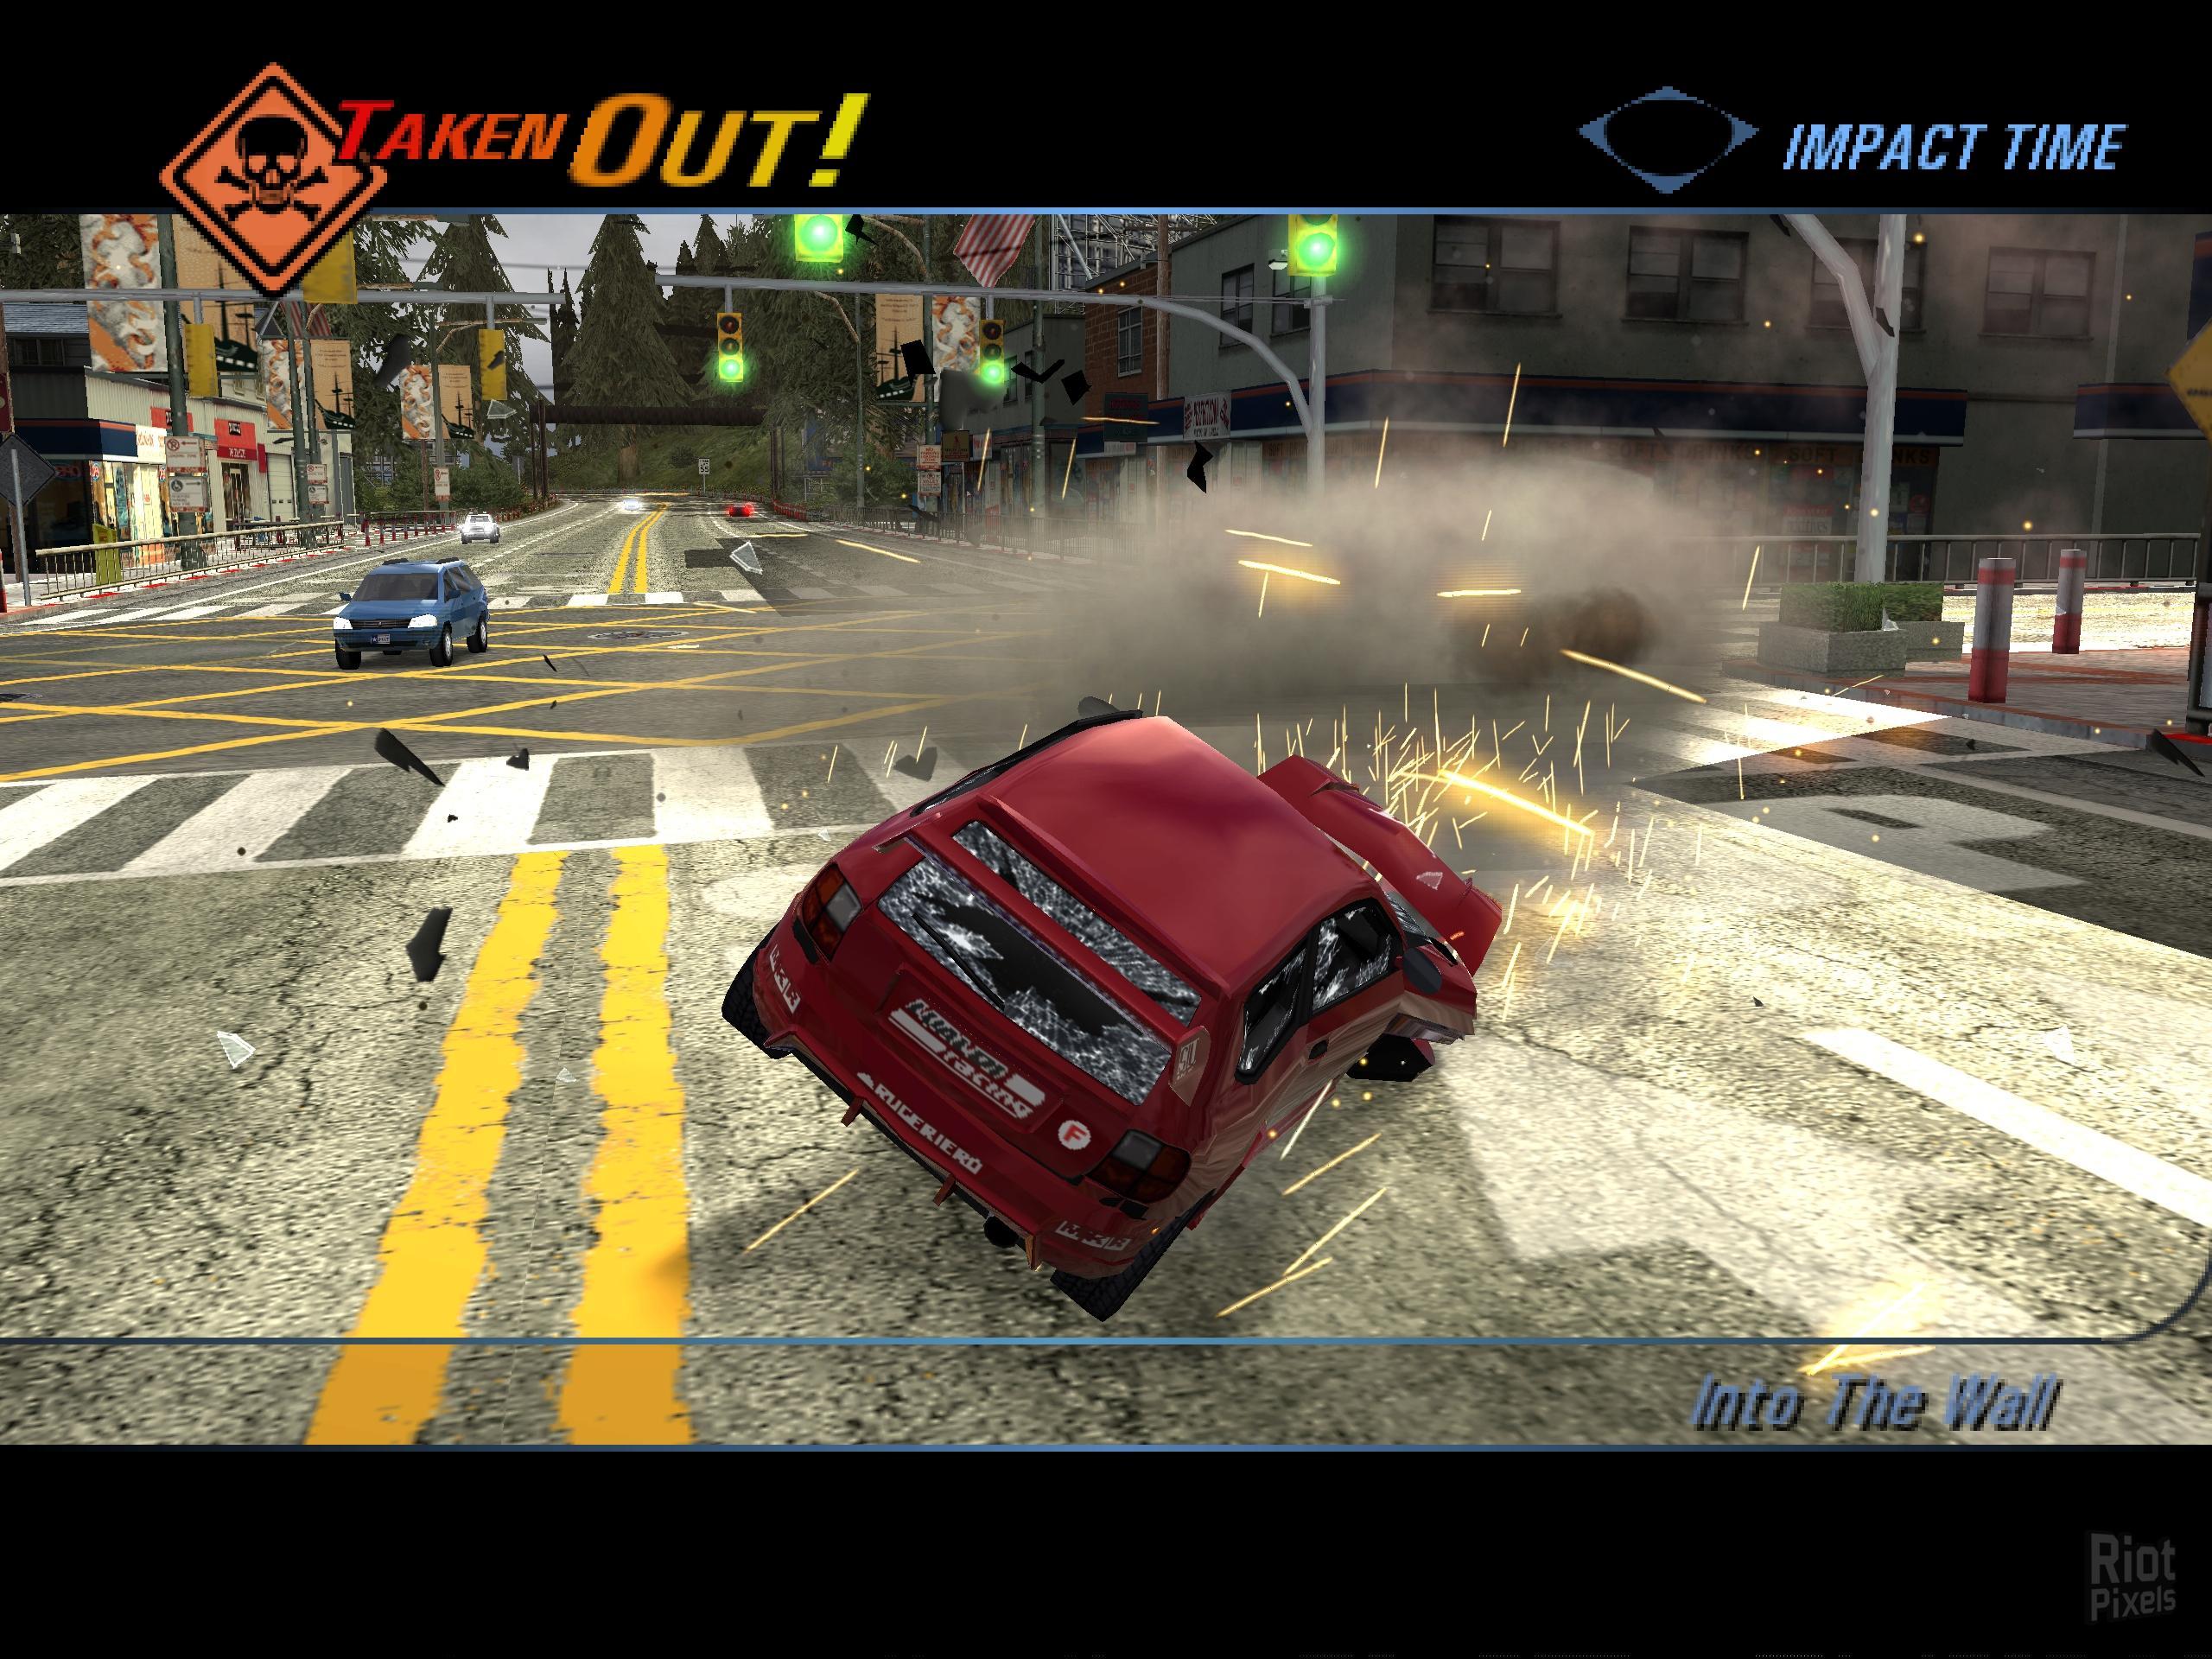 Burnout 3: Takedown screenshots at Riot Pixels, image